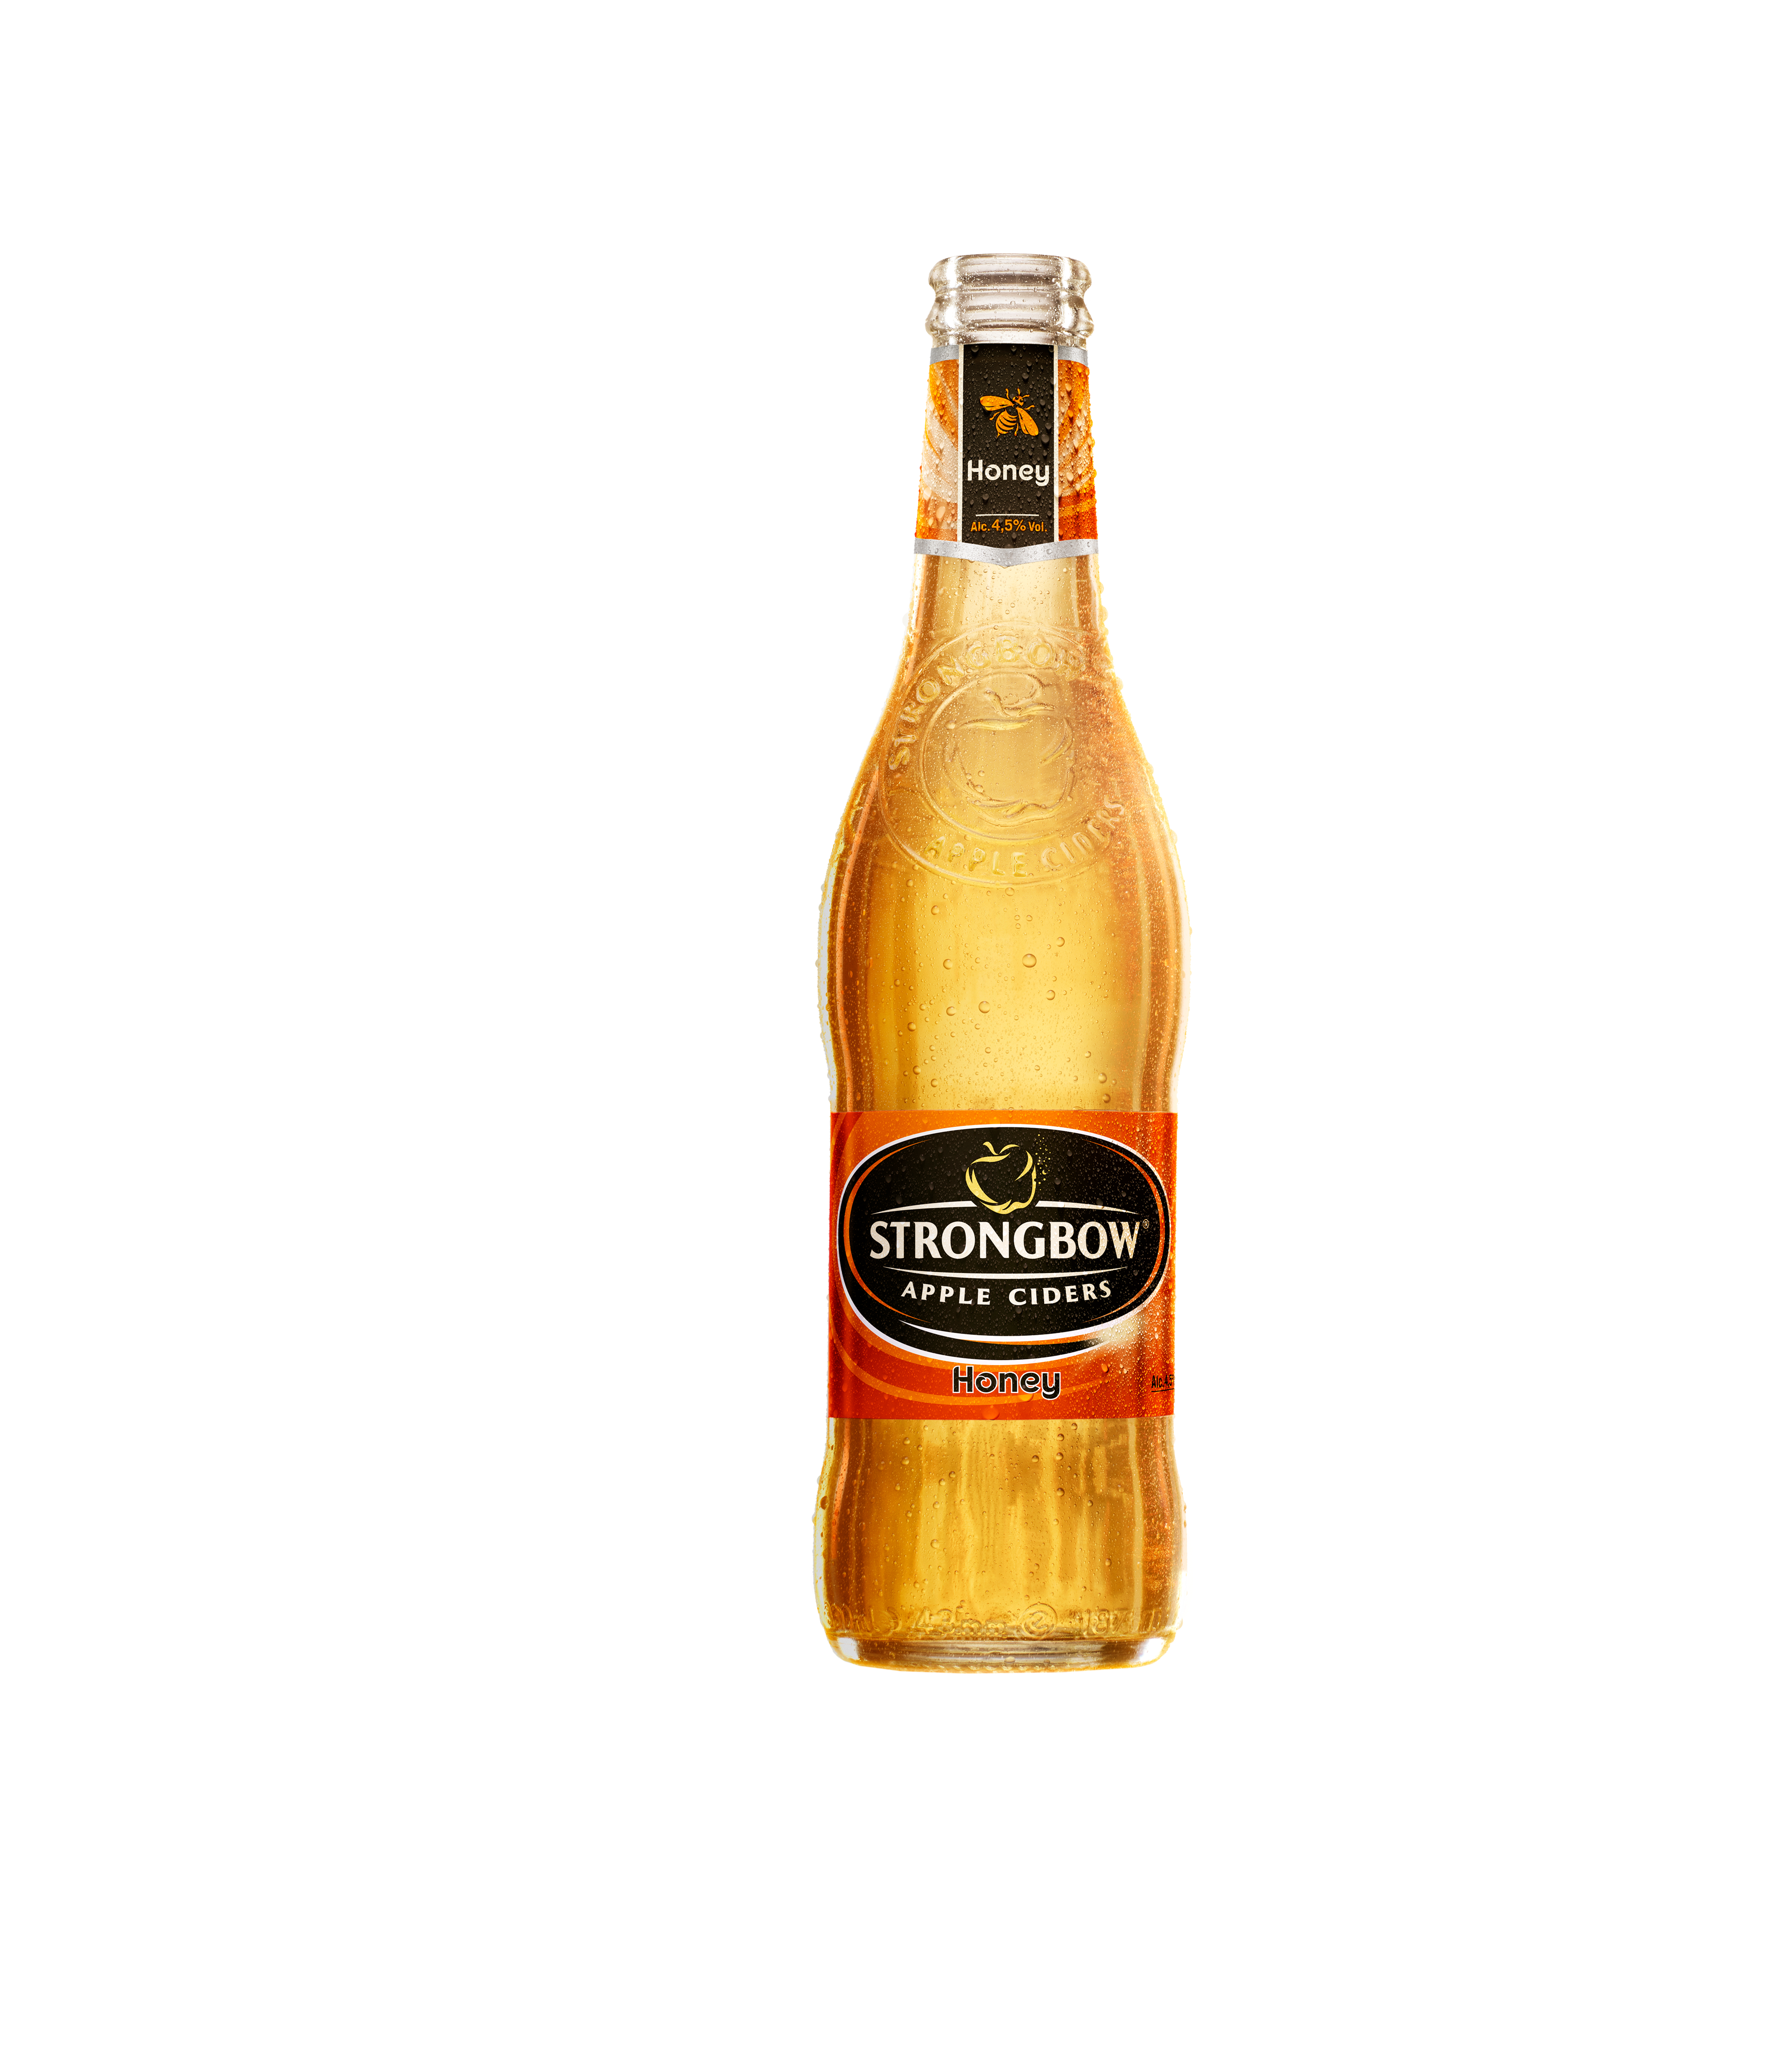 Strongbow Honey Bottle (Old Label) Hero Product Image 3914X4549px